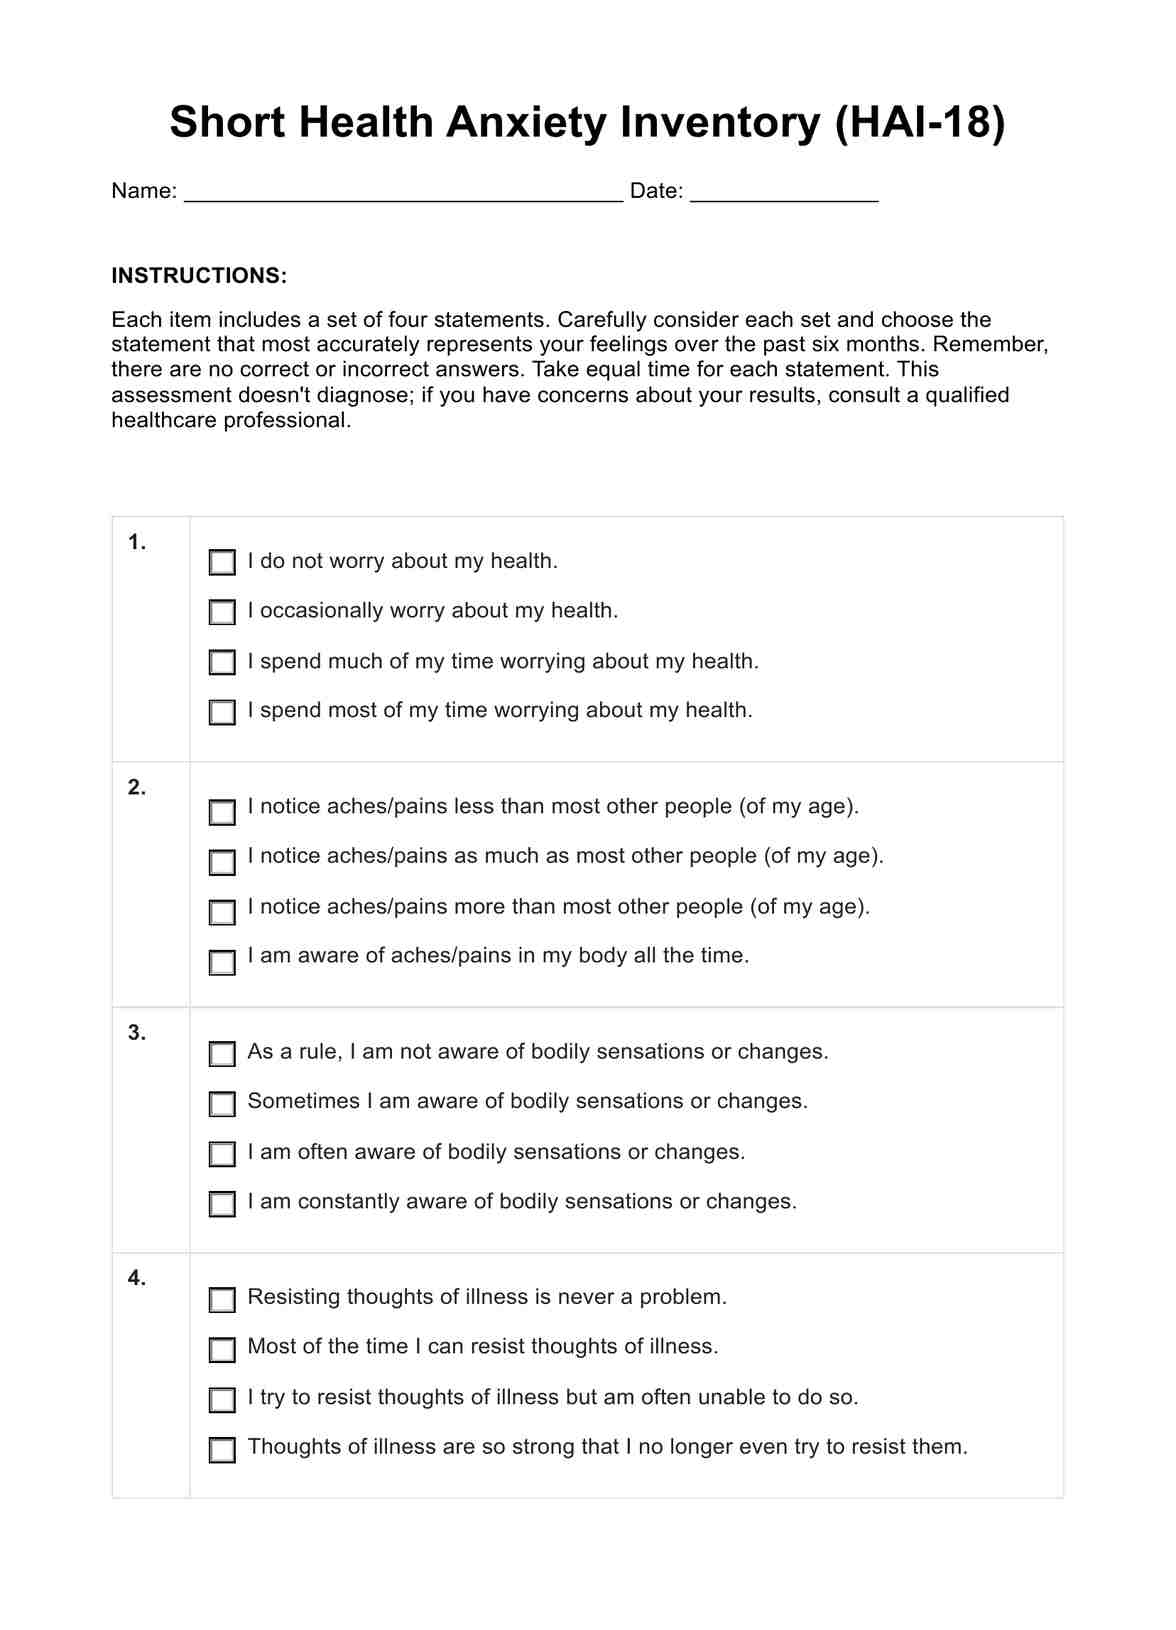 Short Health Anxiety Inventory (HAI-18) PDF Example